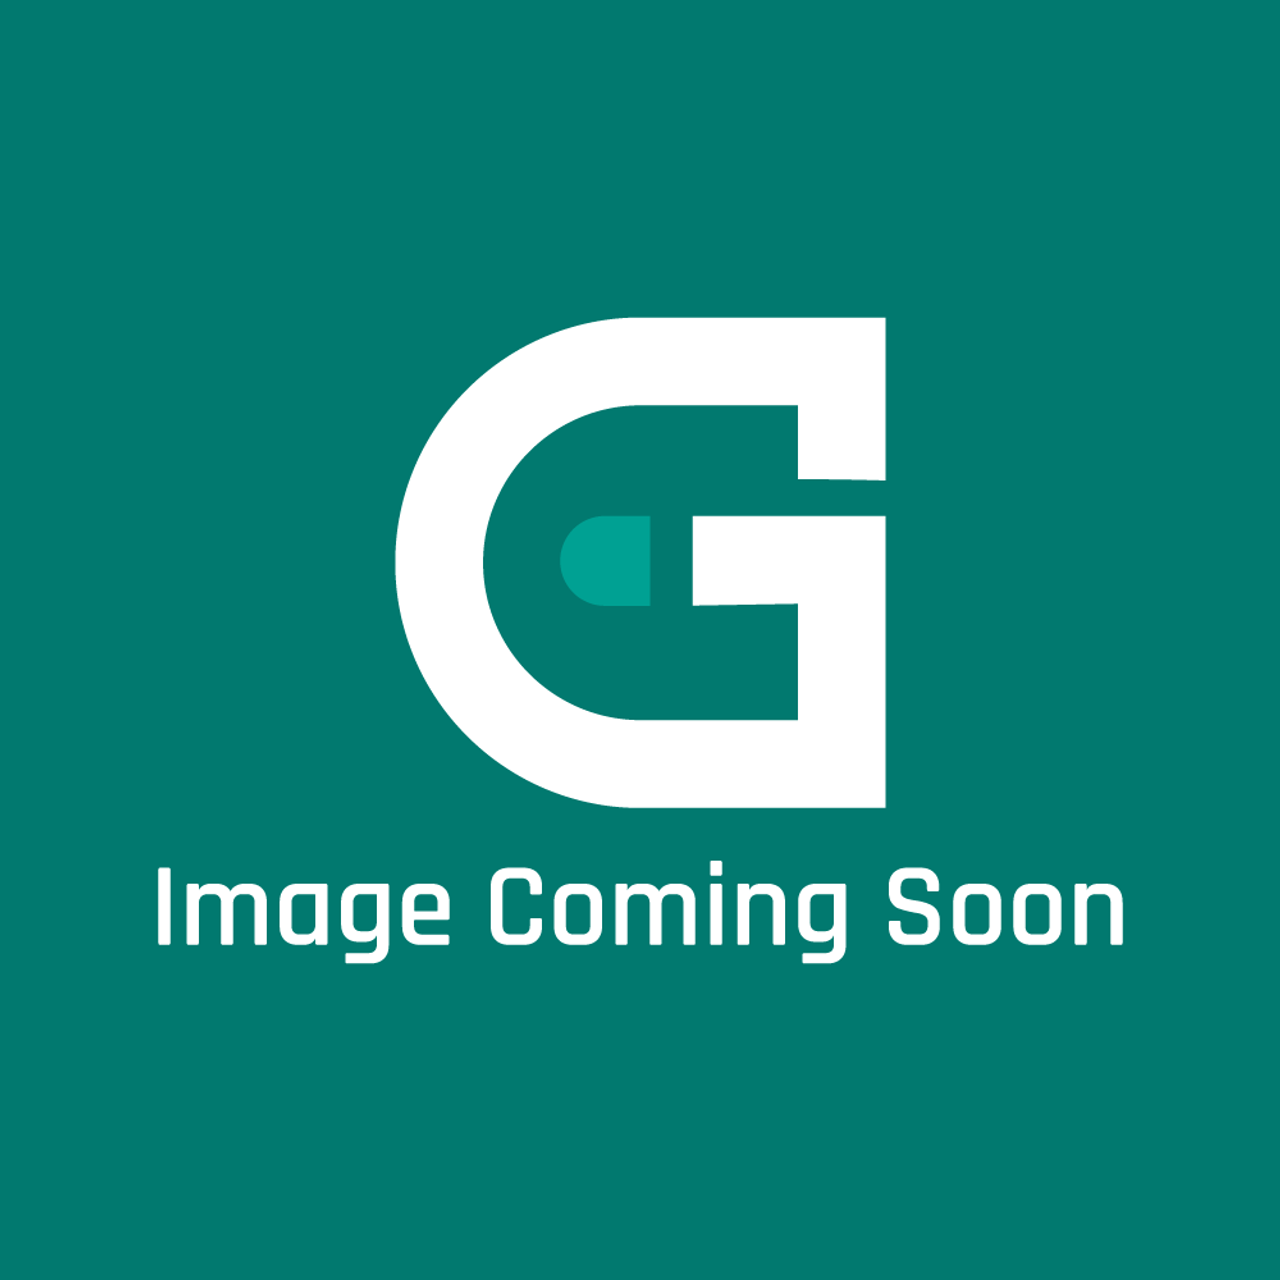 Viking PM010022 - NYLON SHEET - 5.063TK (12" X 4 - Image Coming Soon!